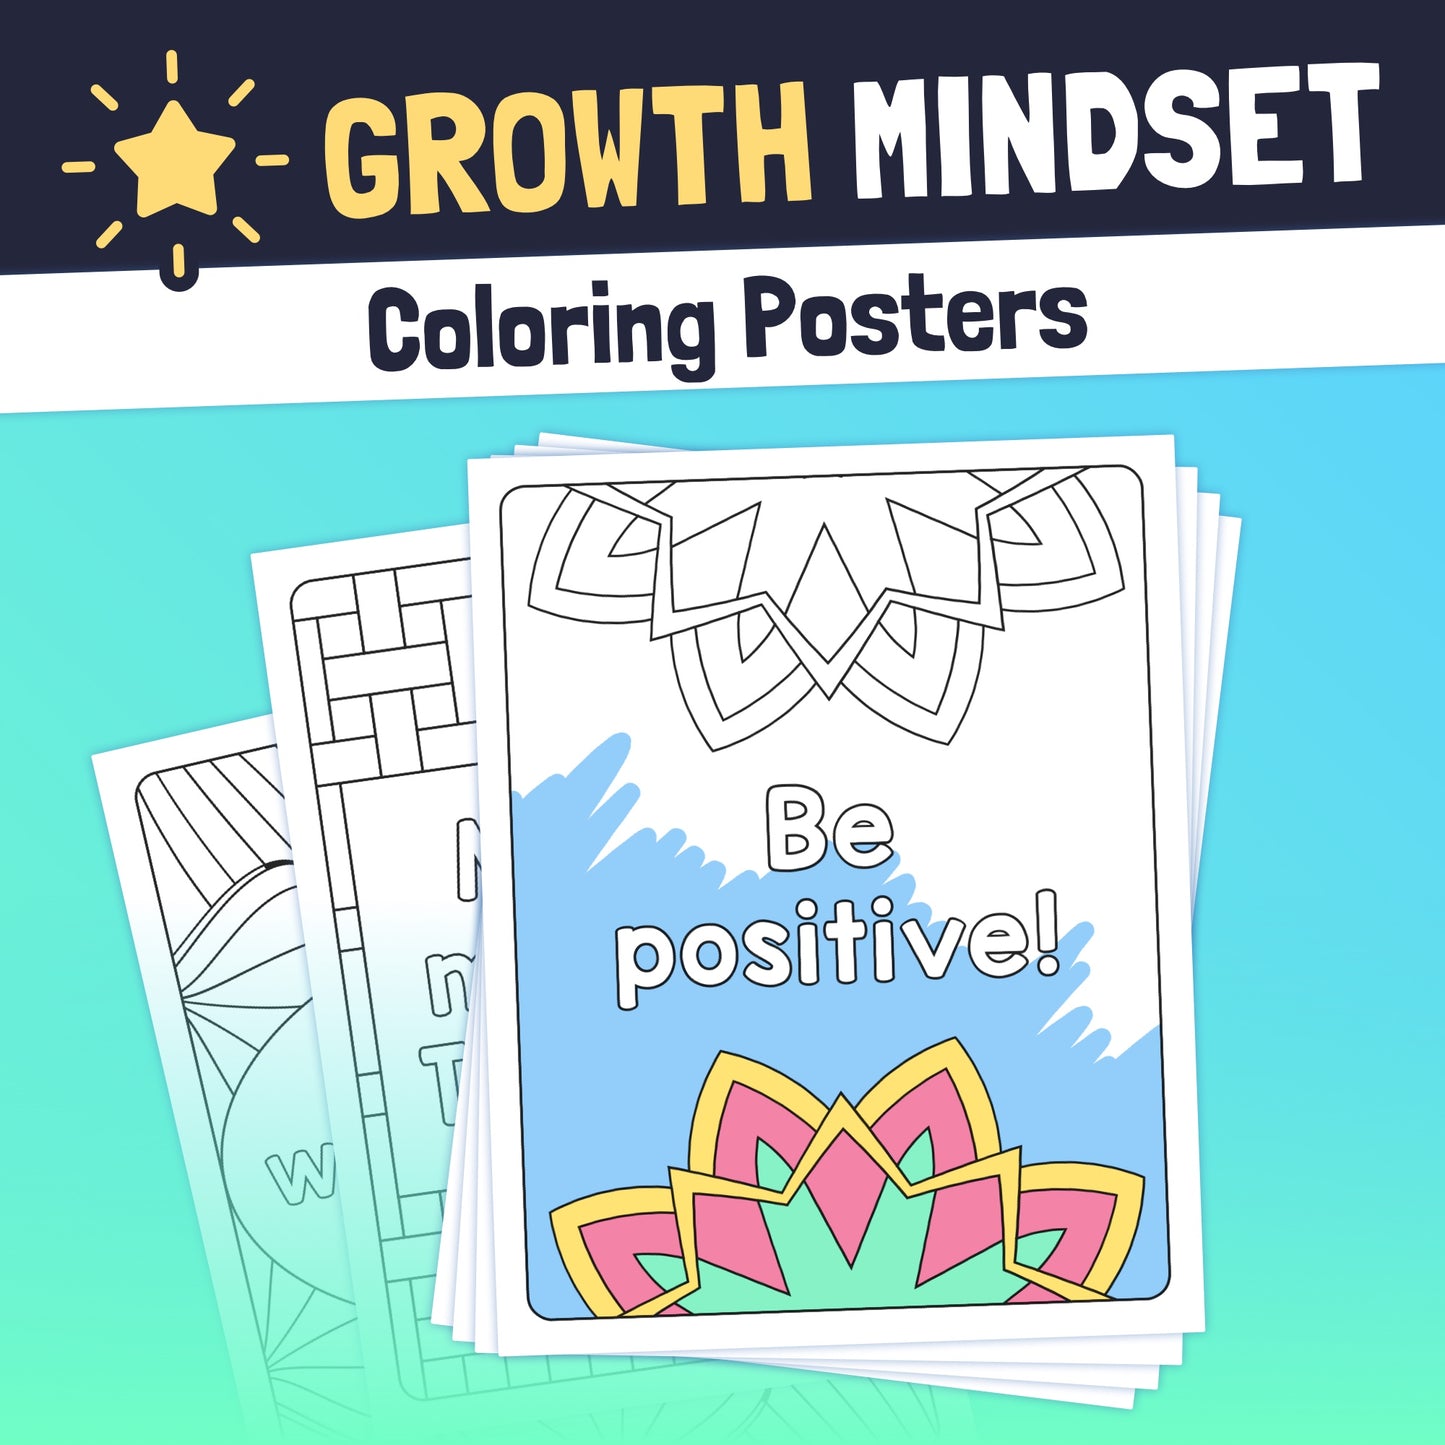 Growth mindset coloring sheets